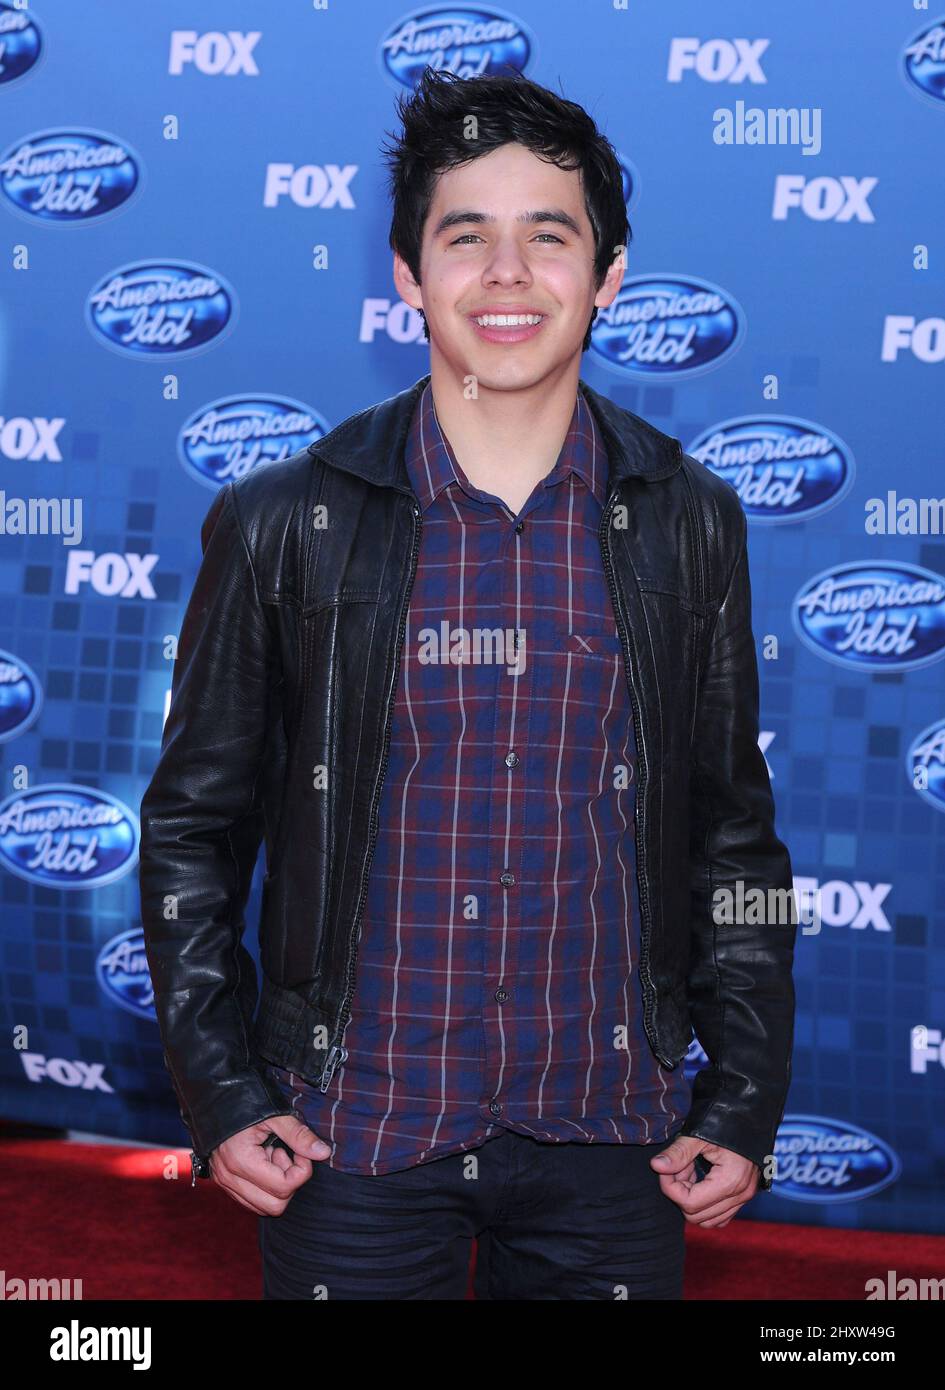 David Archuleta during the American Idol Grand Finale 2011 held at Nokia Theatre L.A. Live, California Stock Photo